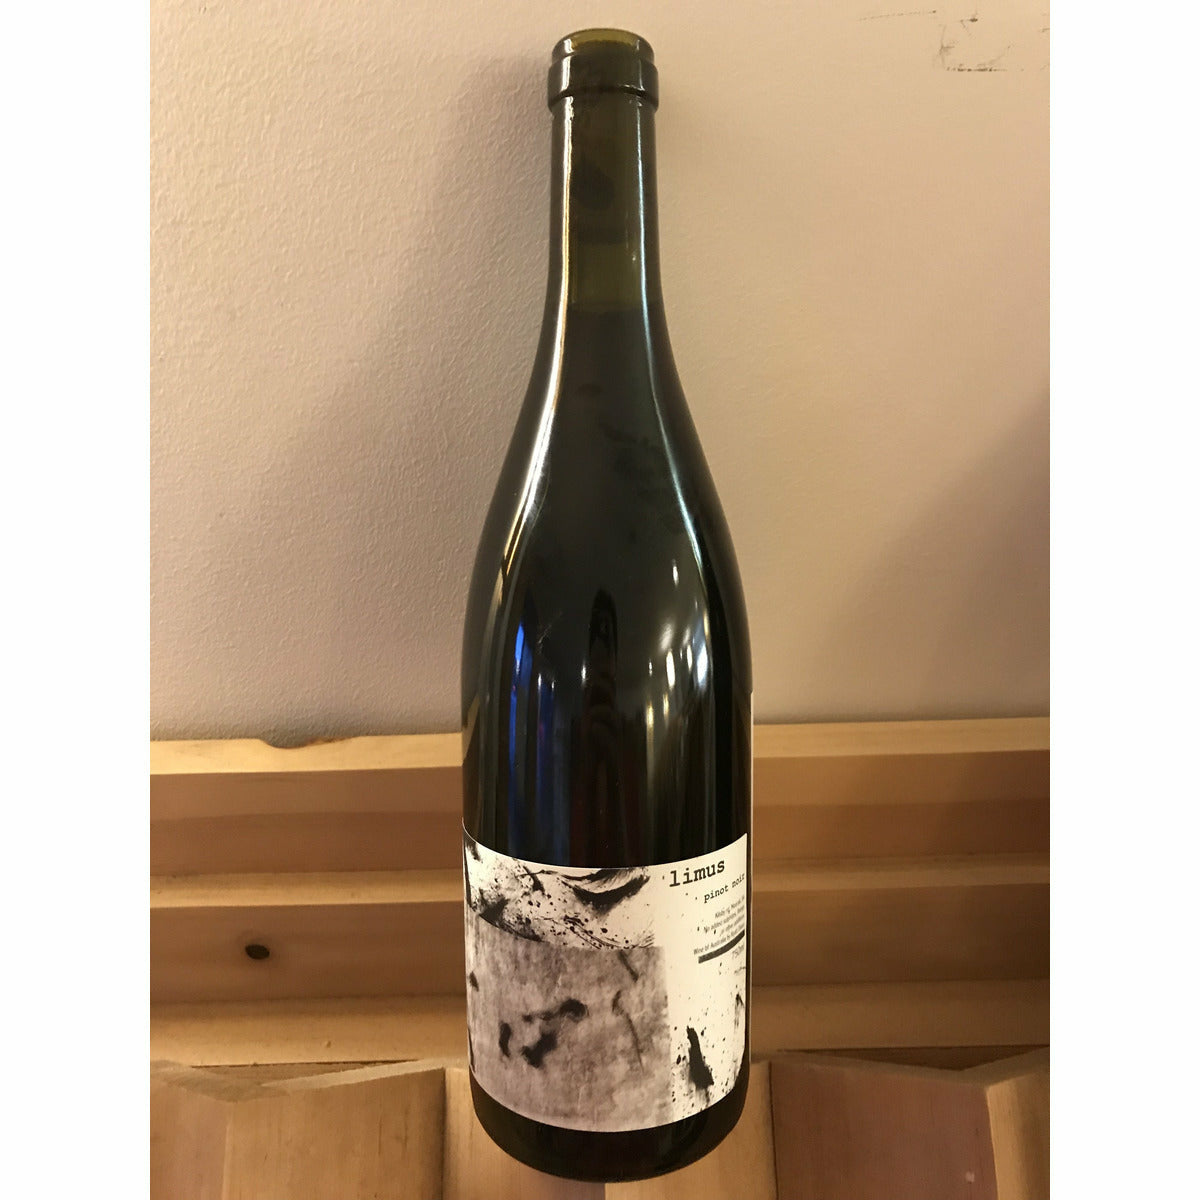 Limus Adelaide Hills Pinot Noir 2018